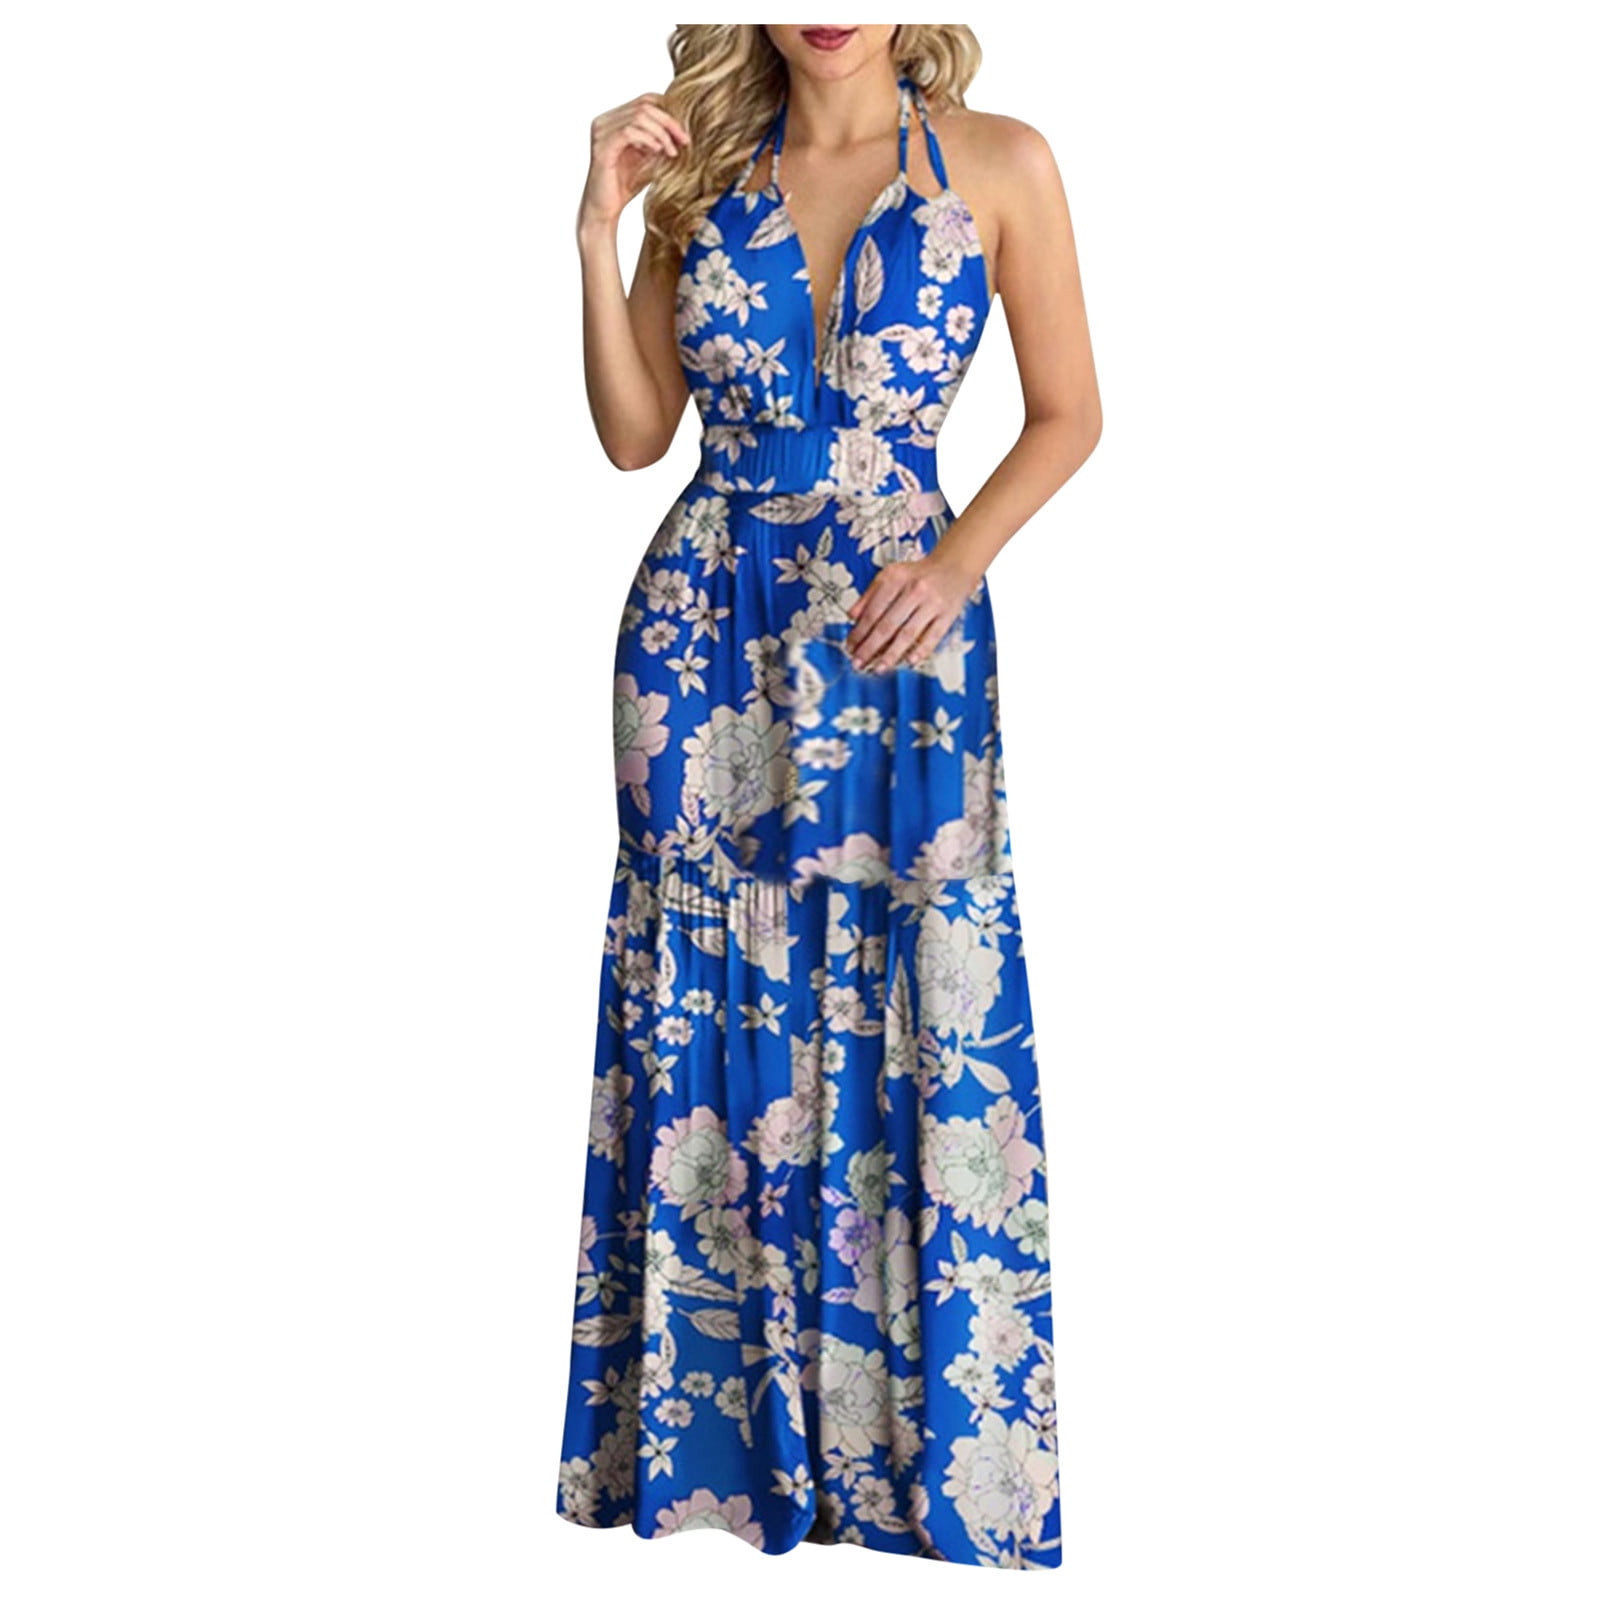 YODETEY Summer Dresses Women Tropical Print Halter Backless Maxi Dress ...